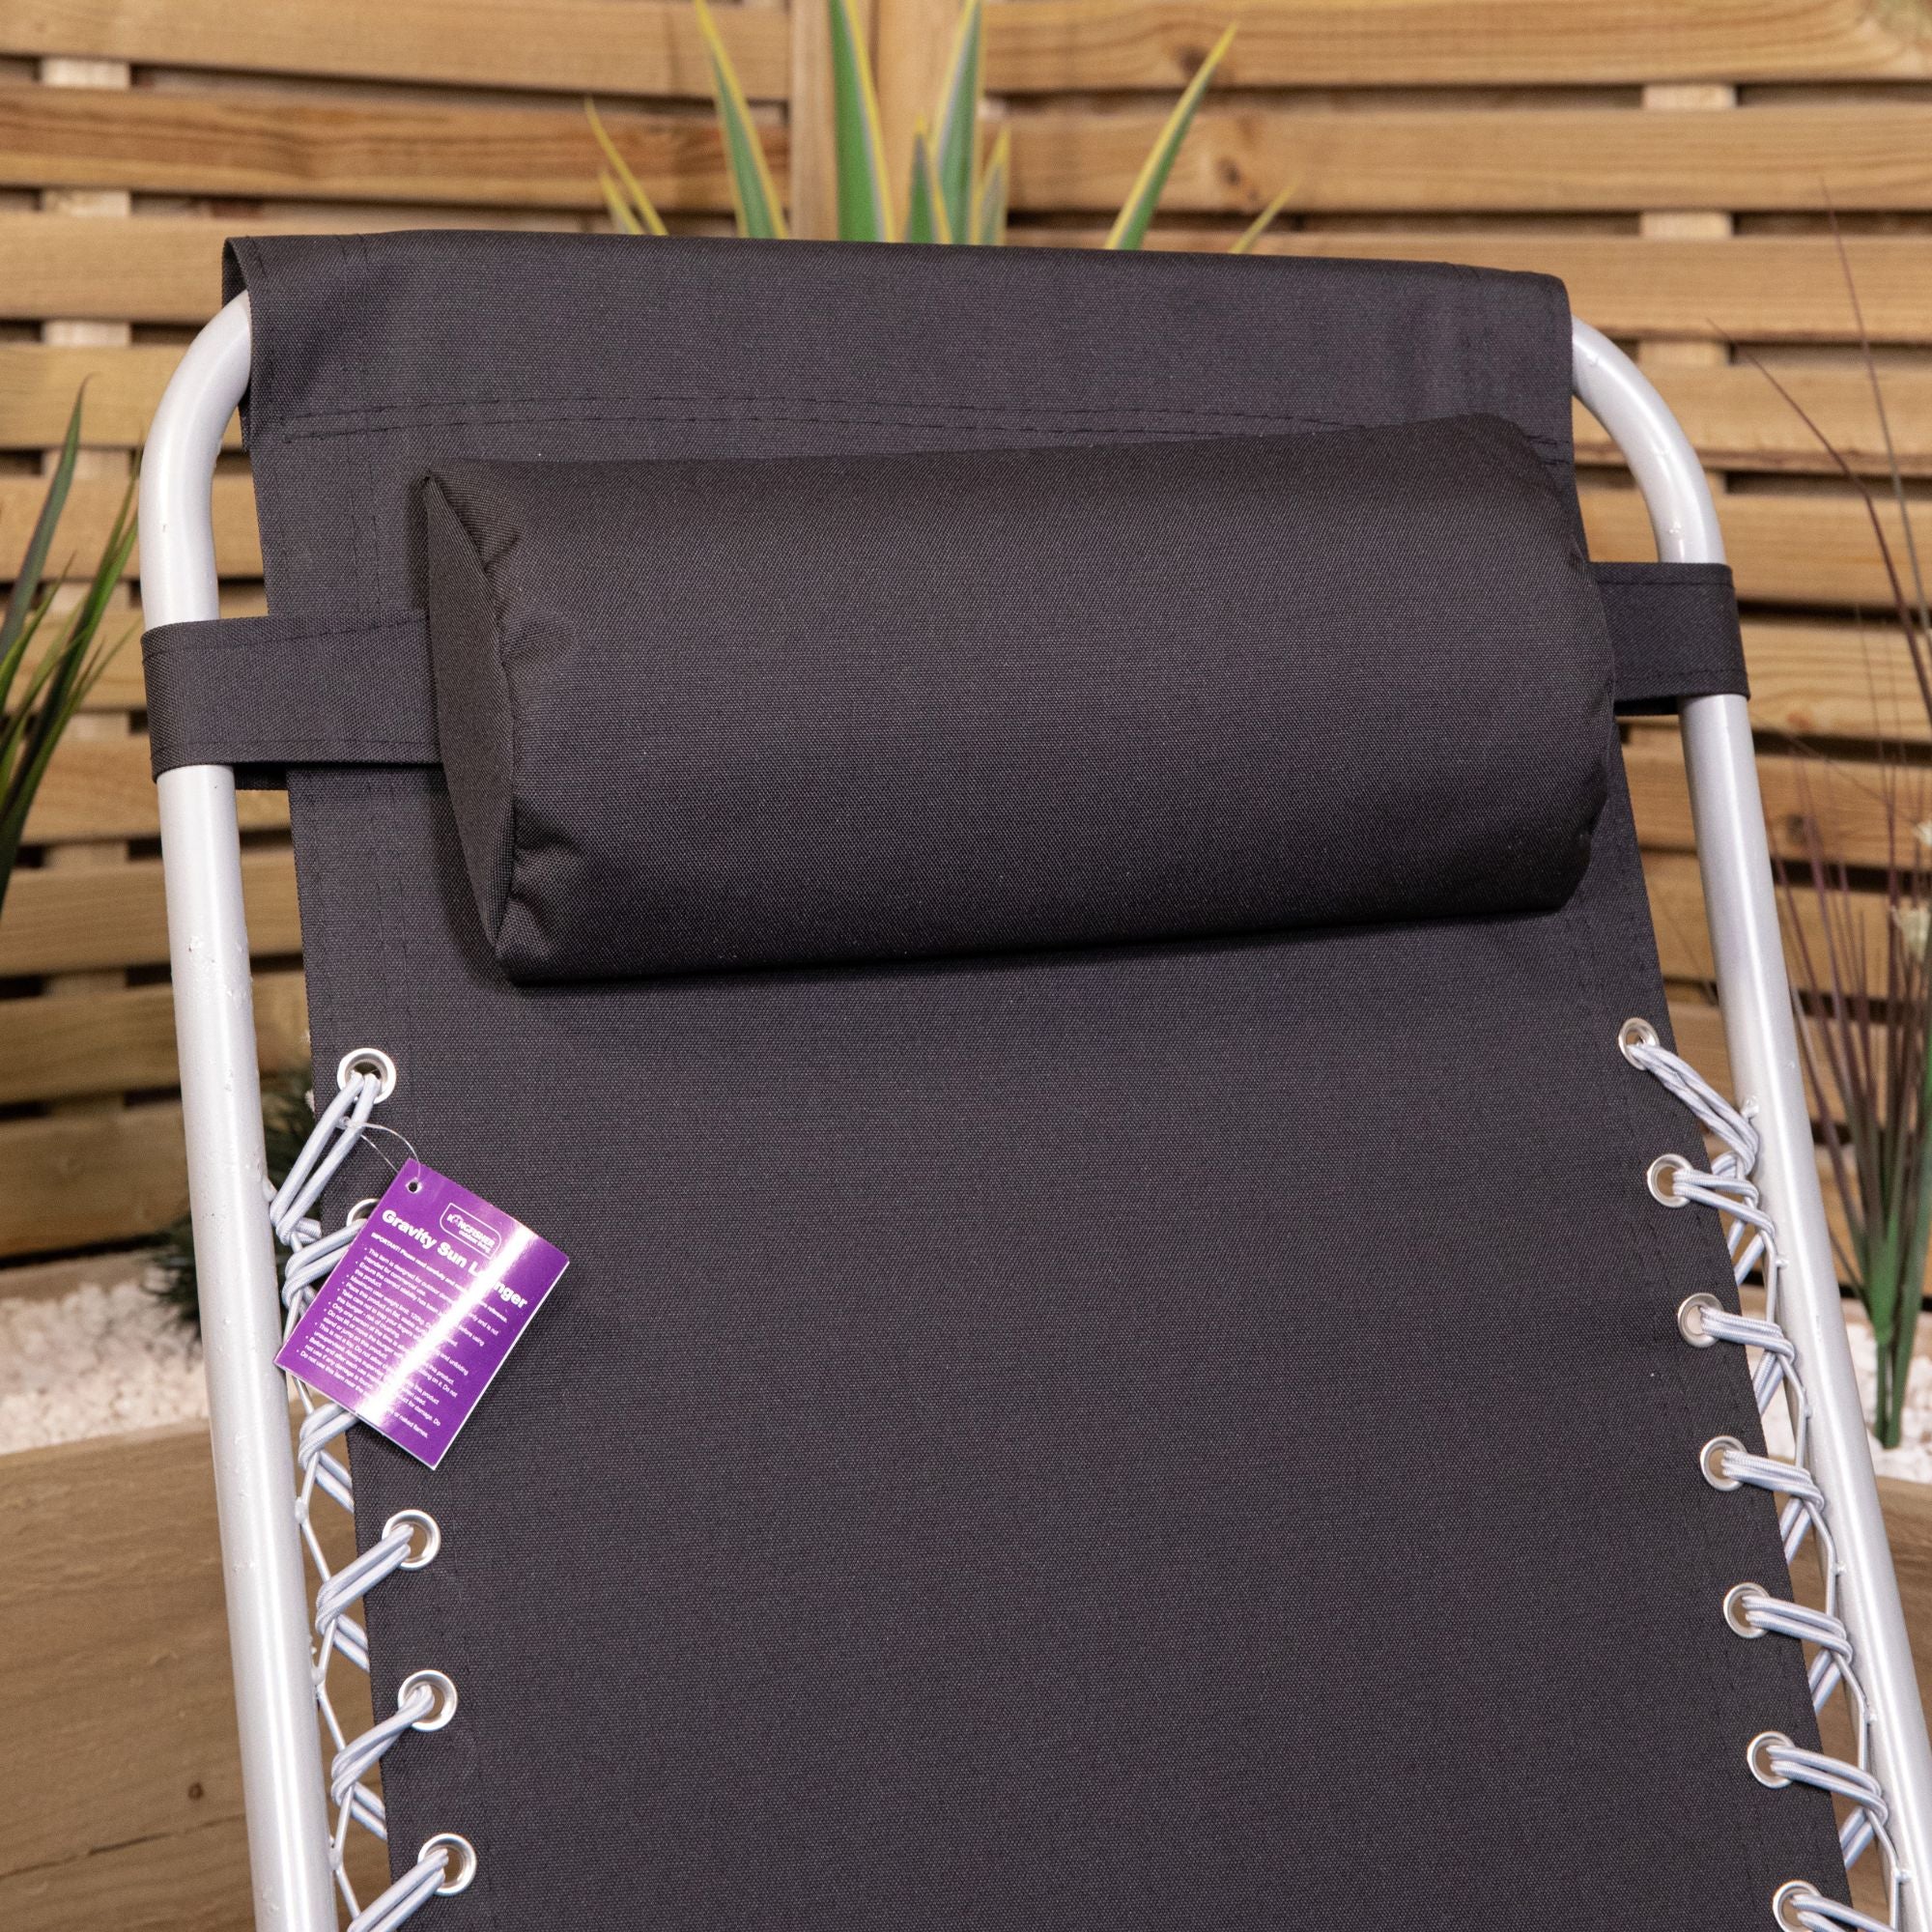 Multi Position Garden Gravity Relaxer Chair Sun Lounger in Black & Silver